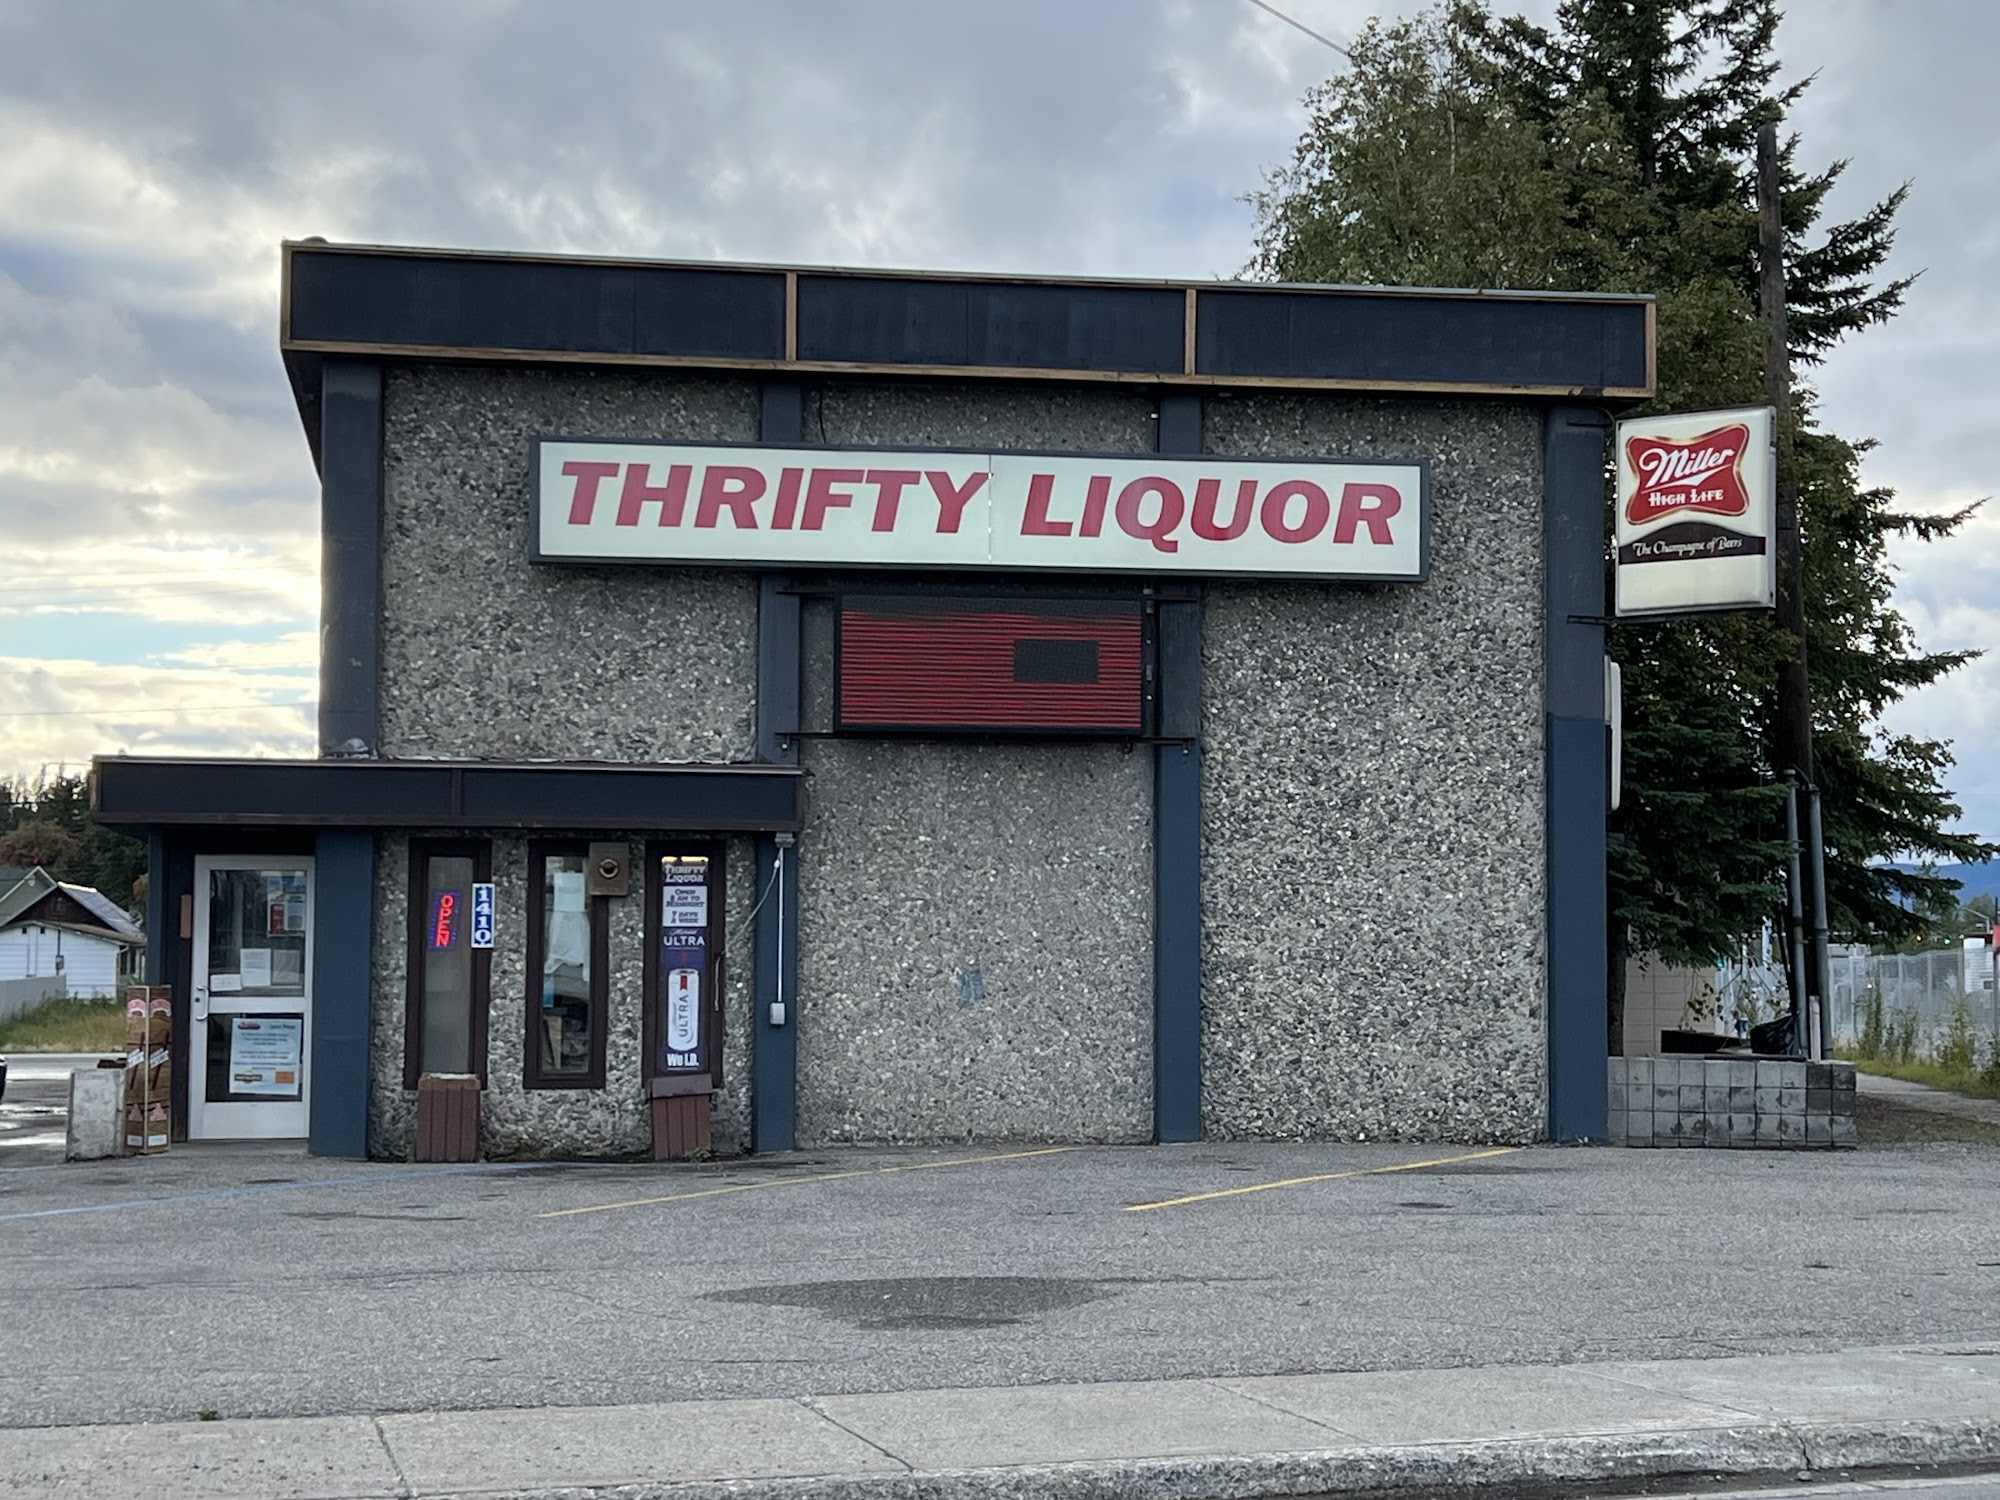 Thrifty Liquor